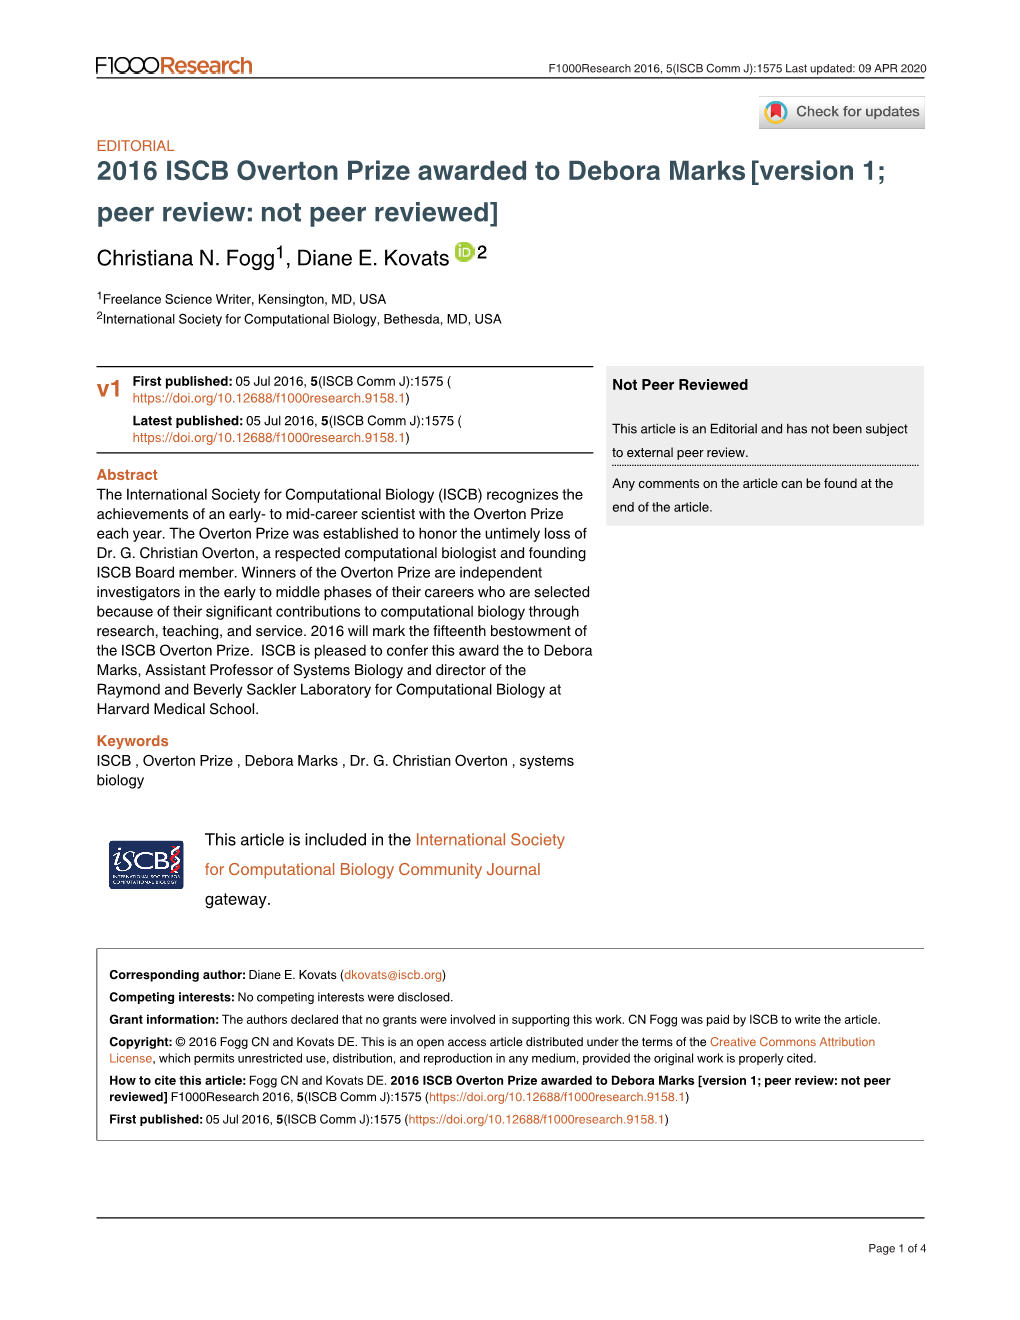 2016 ISCB Overton Prize Awarded to Debora Marks[Version 1; Peer